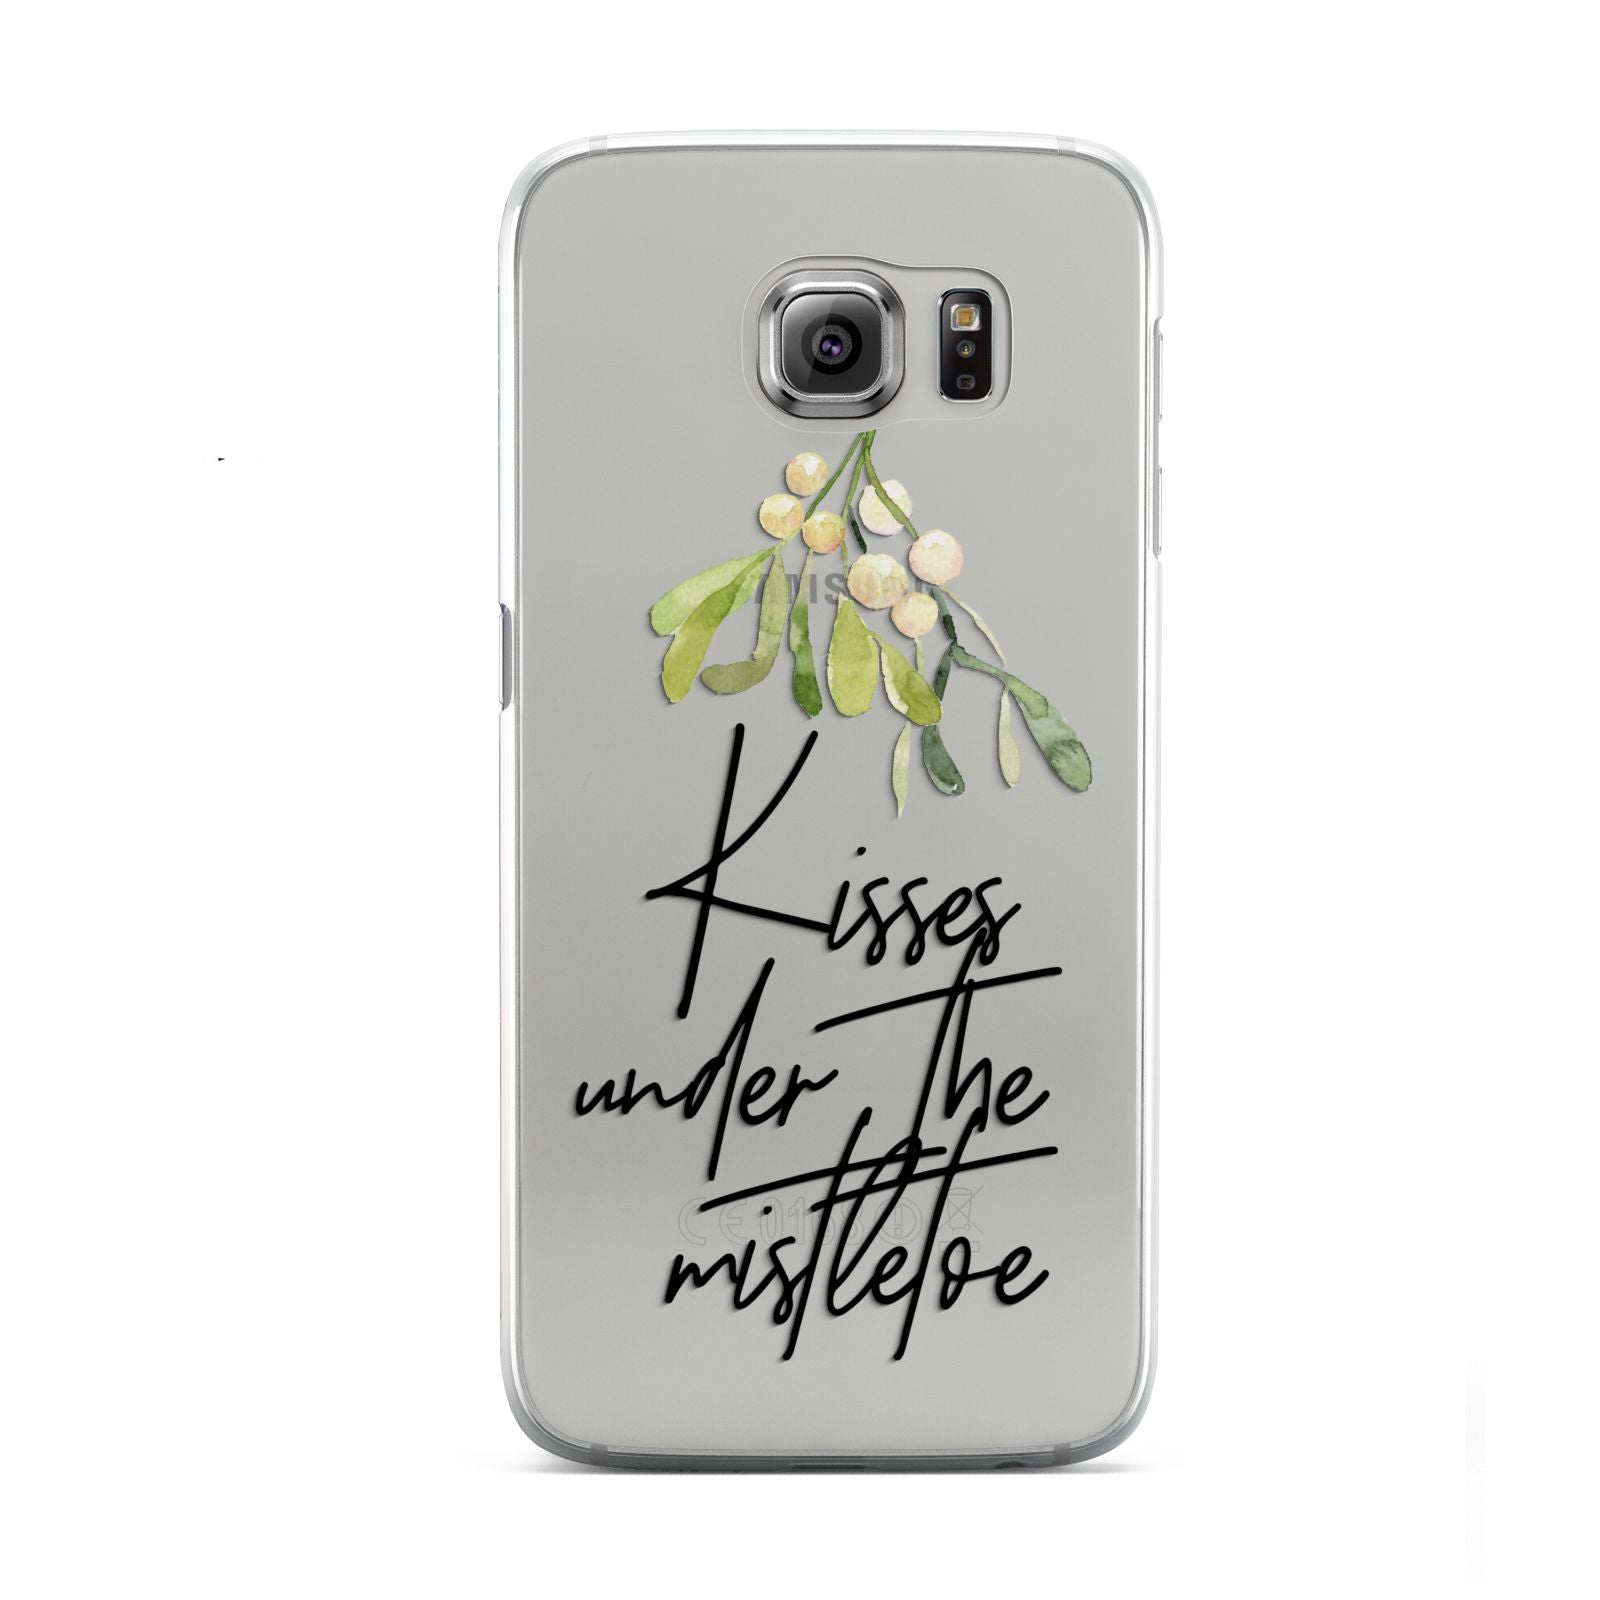 Kisses Under The Mistletoe Samsung Galaxy S6 Case